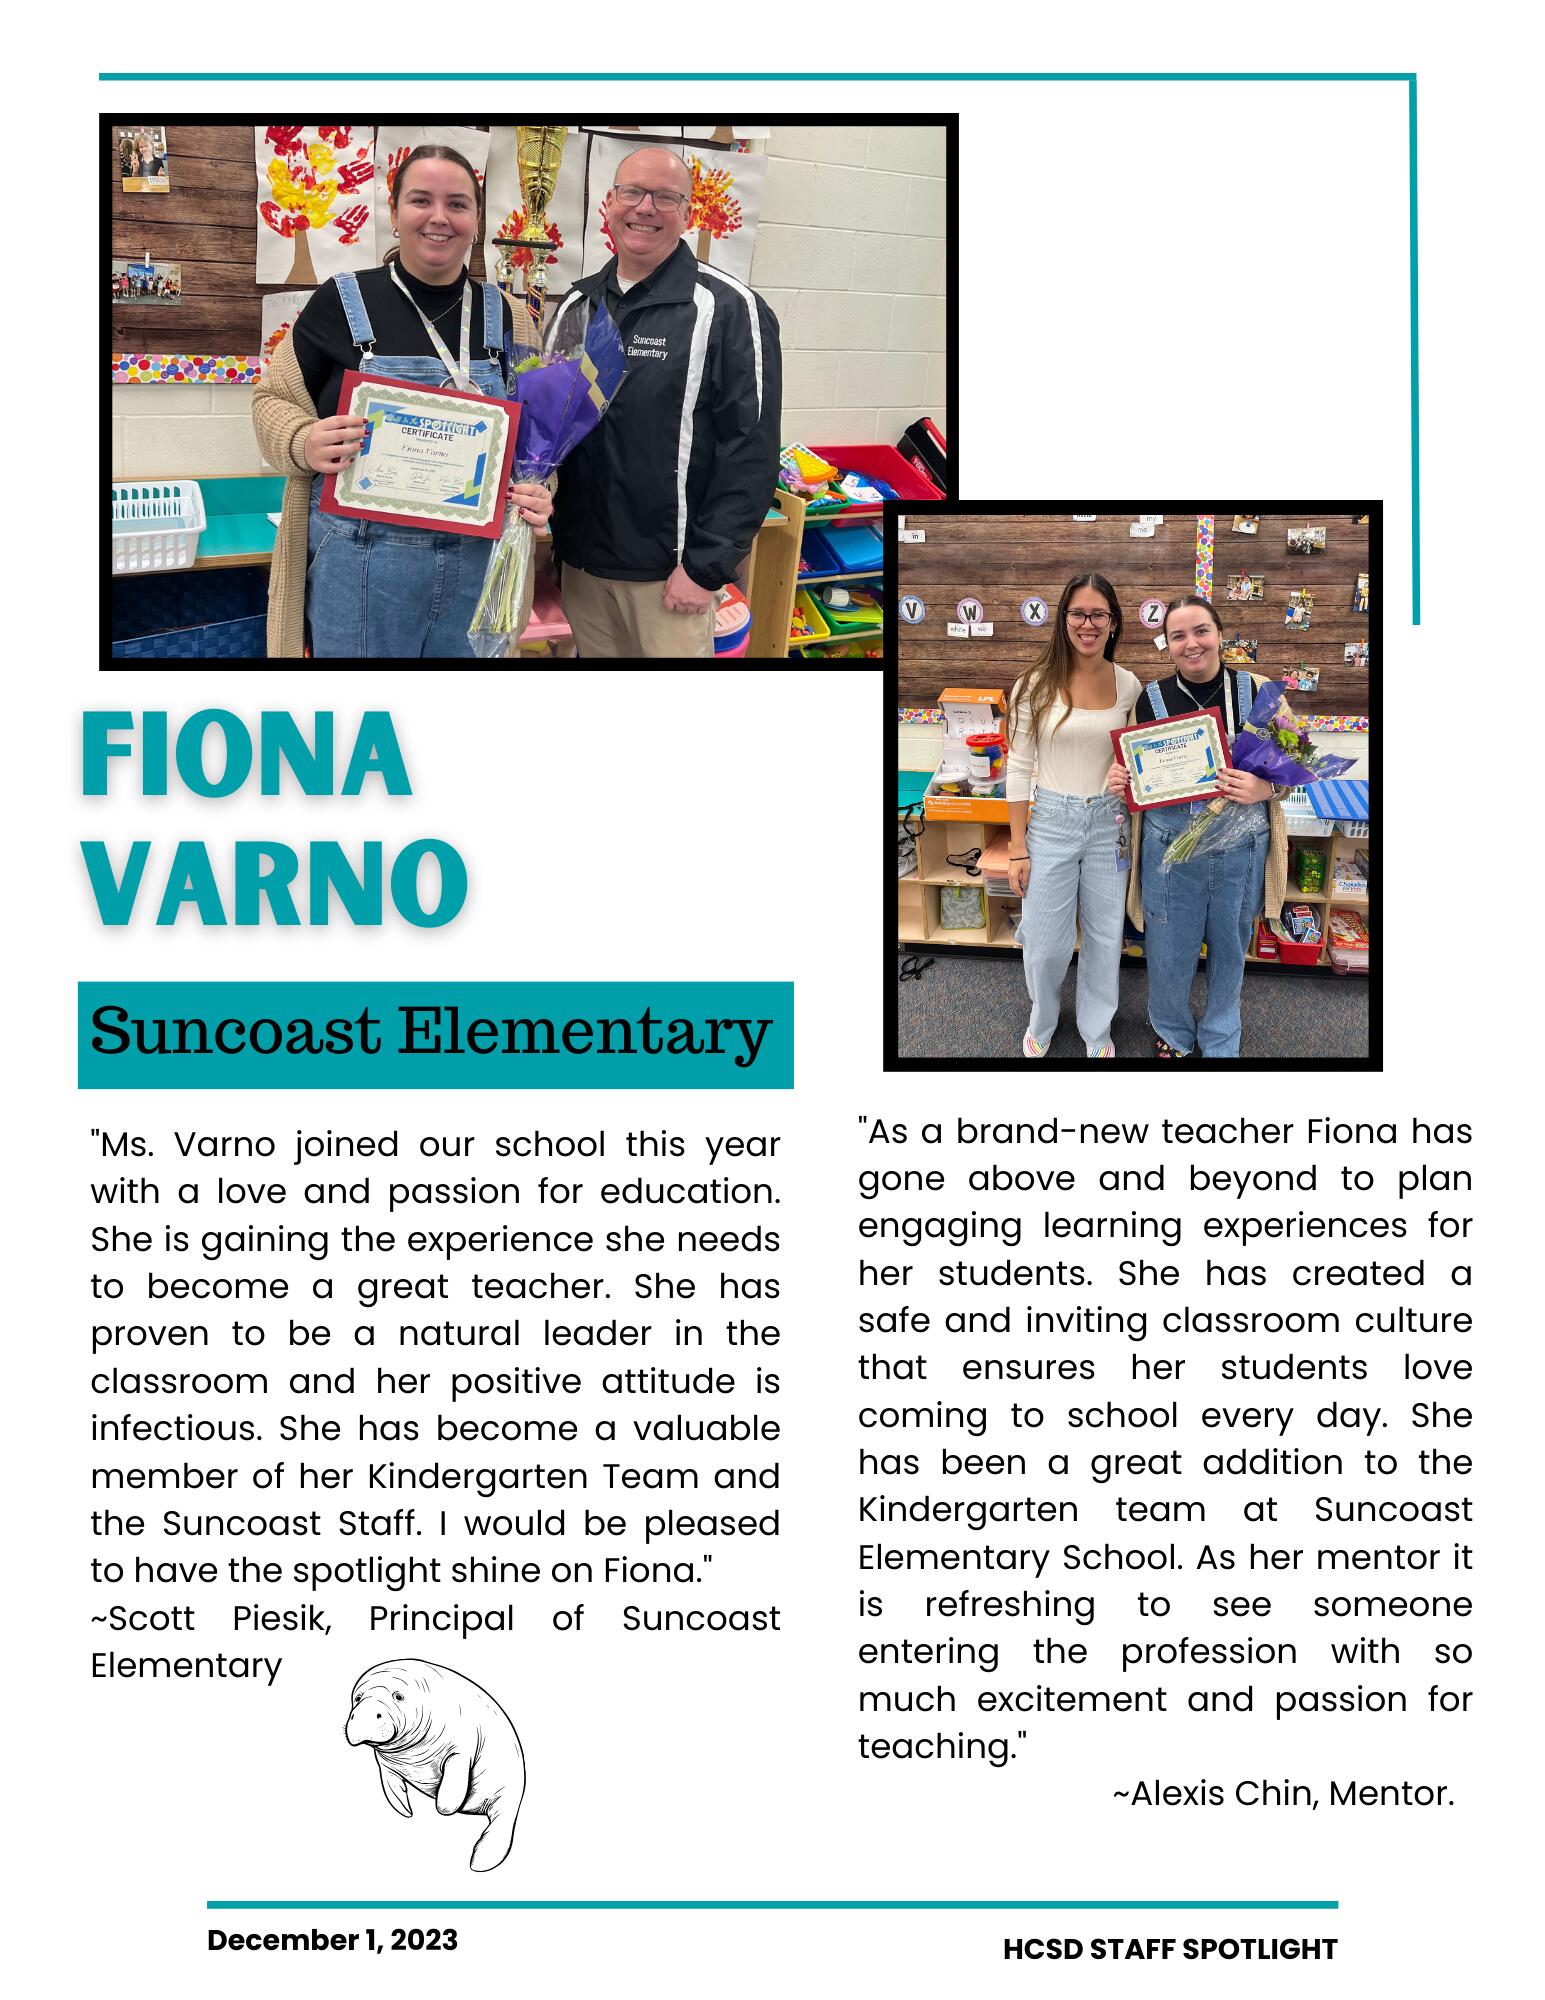 Staff Spotlight on Fiona Varno